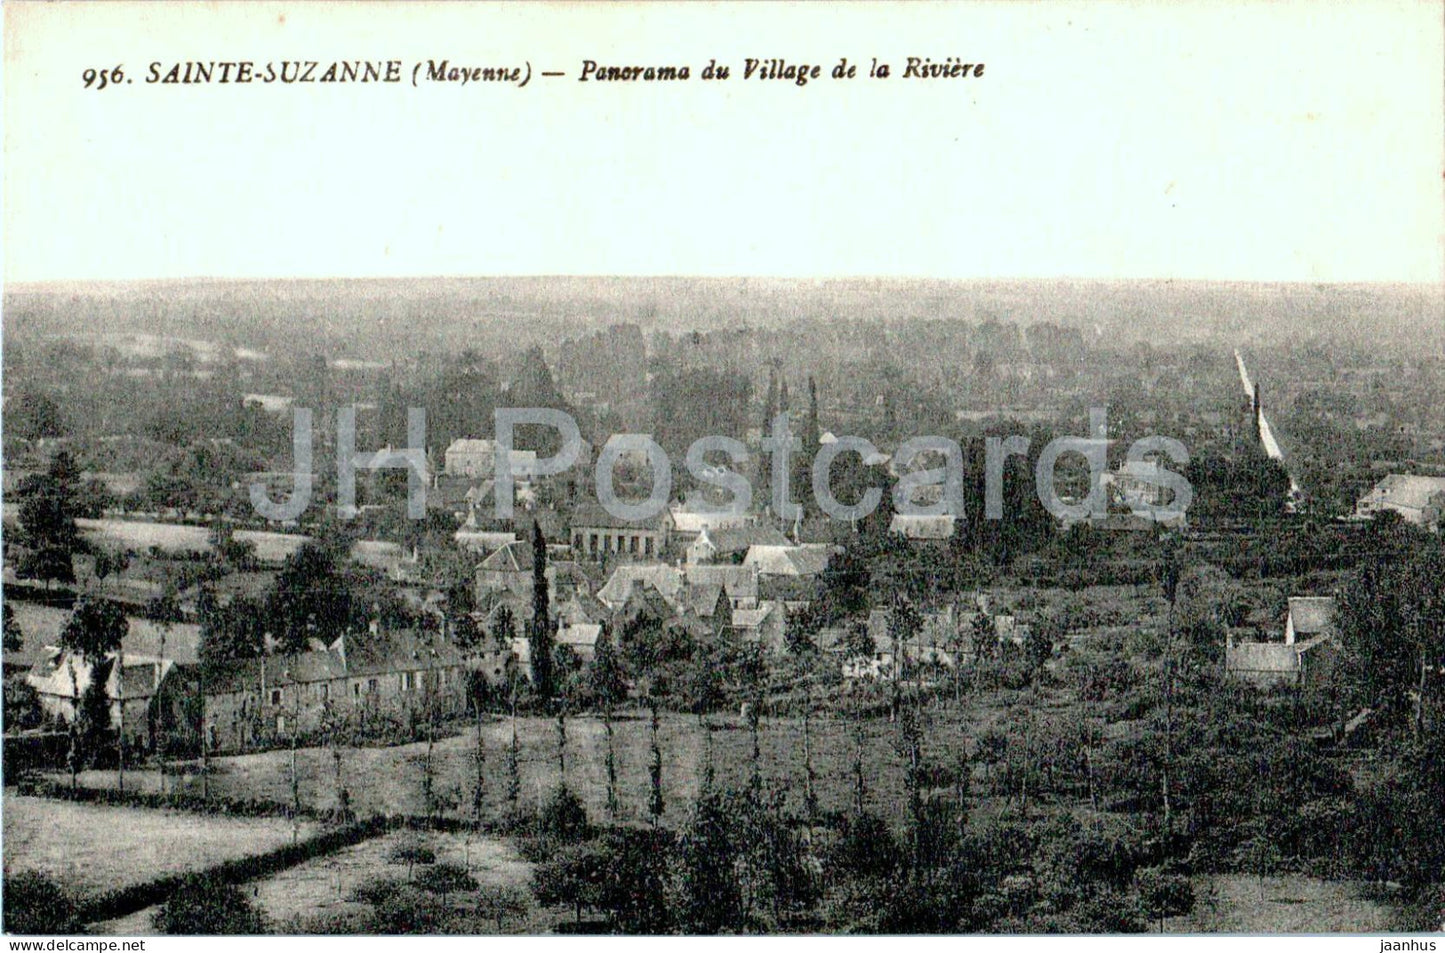 Sainte Suzanne - Panorama du Village de la Riviere - 956 - old postcard - France - used - JH Postcards